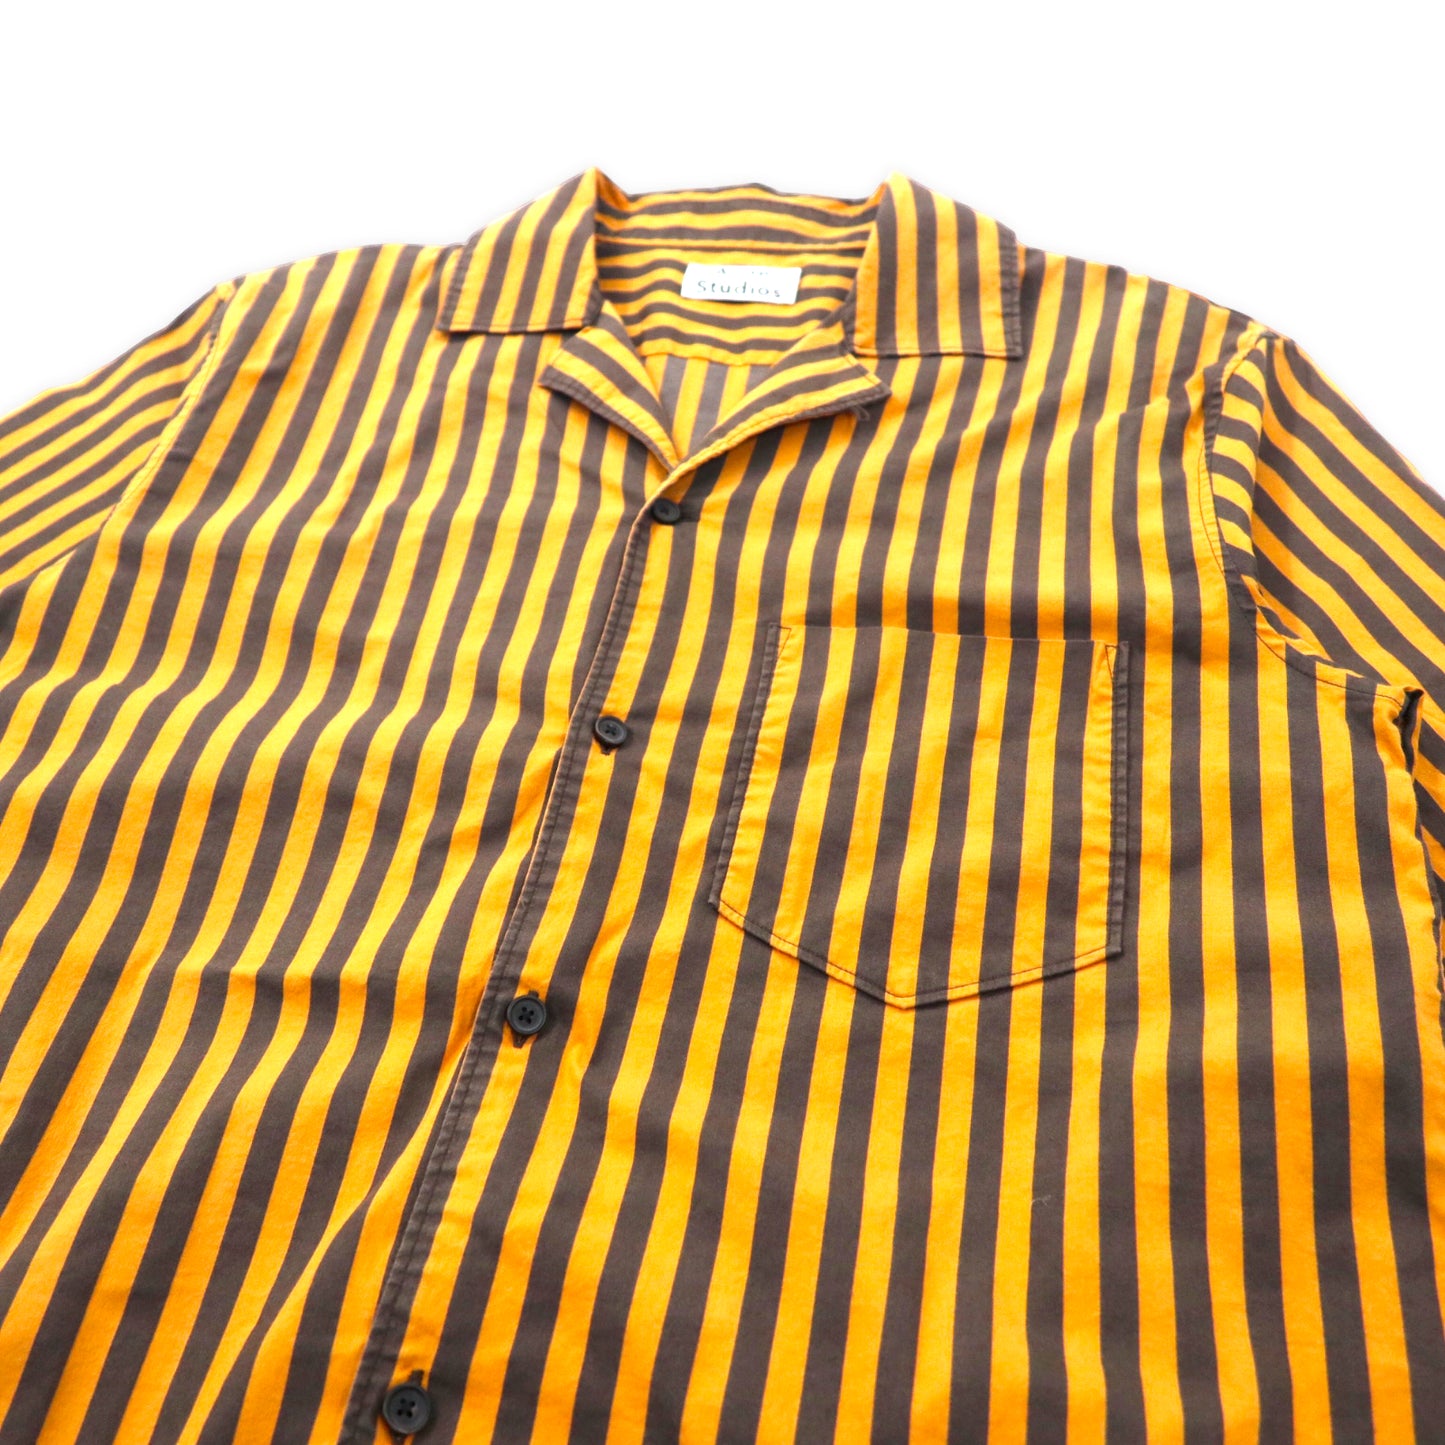 ACNE STUDIOS Short Sleeve Open Color Shirt 48 Orange Striped